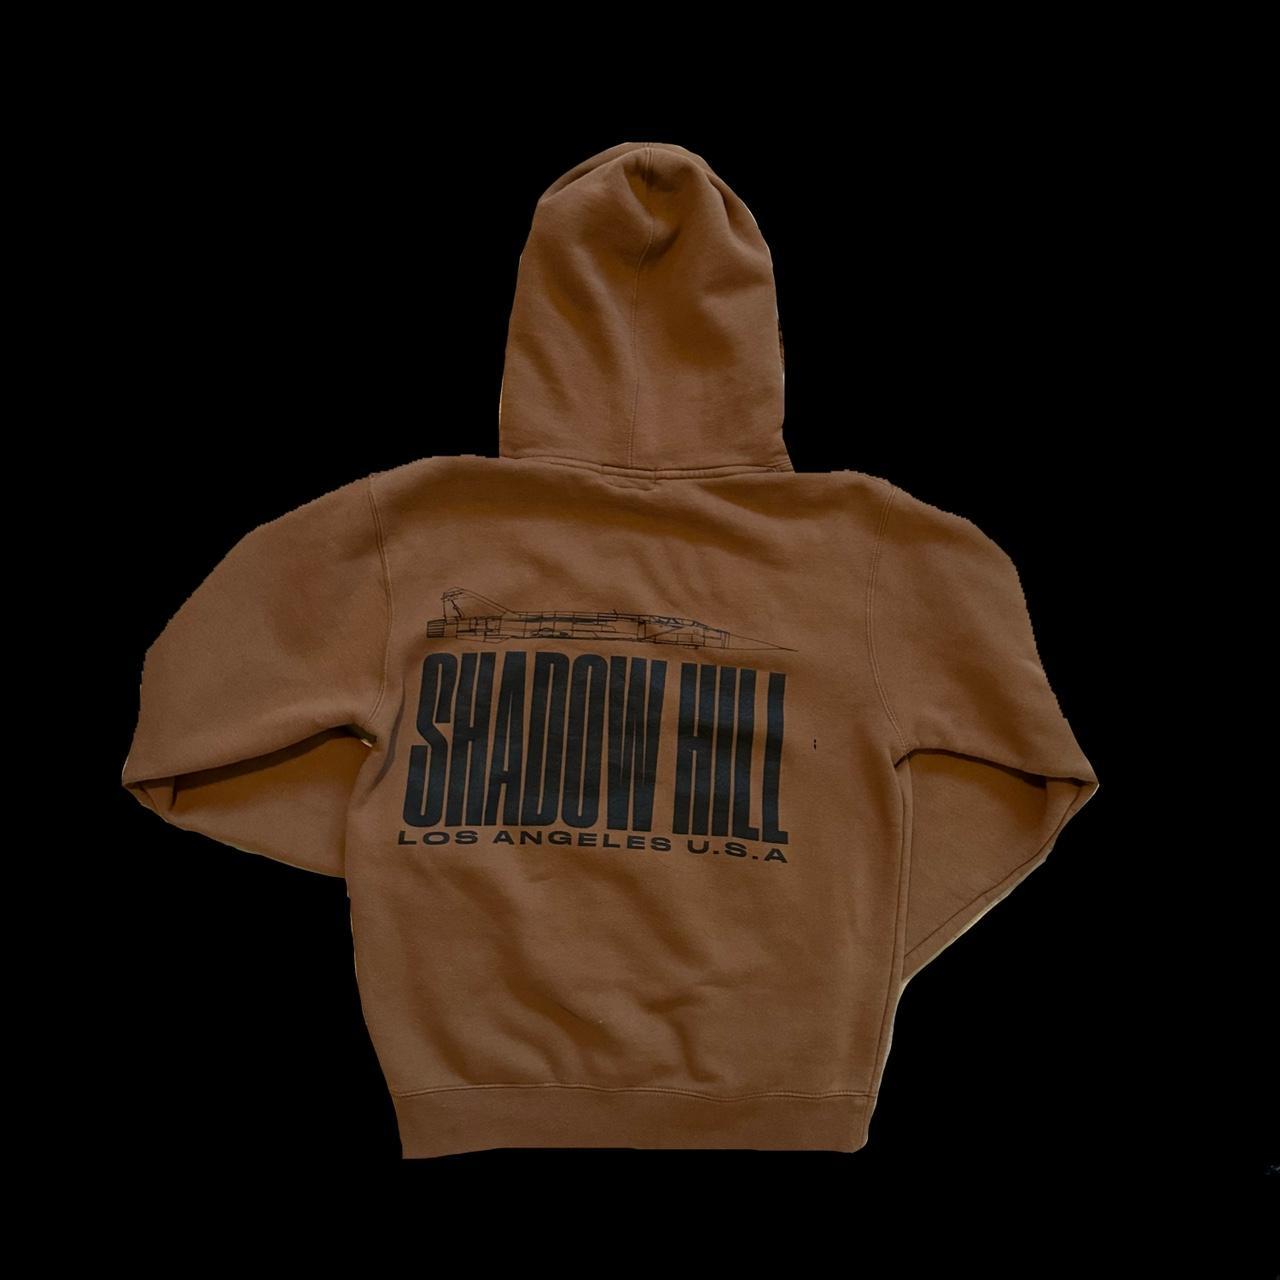 Shadow Hill USA Los Angeles Brown Pullover Hoodie Sweatshirt - Small